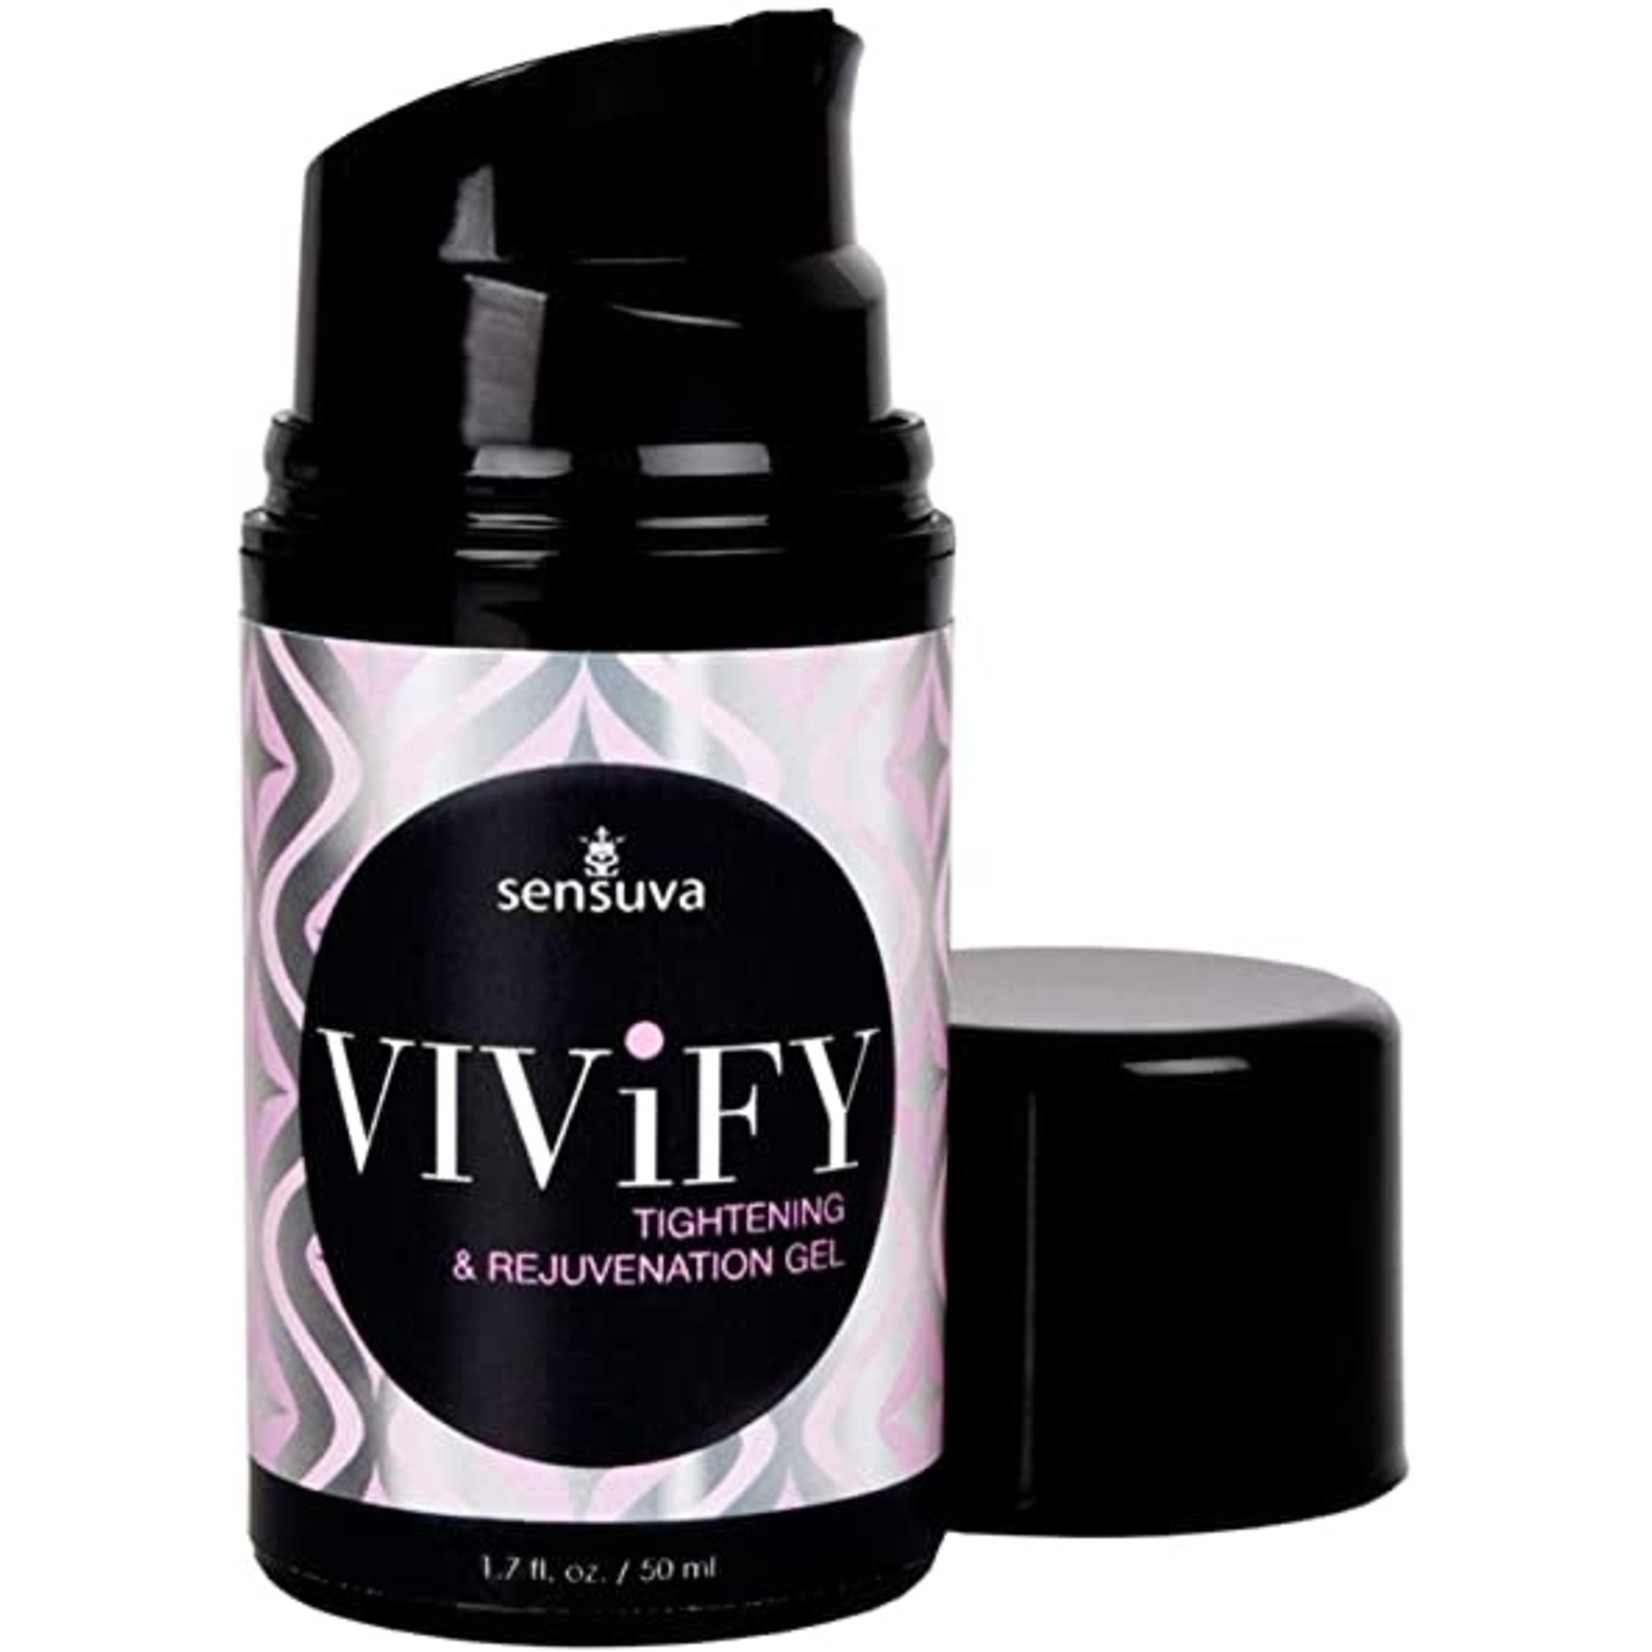 Vivify Tightening & Rejuvenation Gel 1.7 fl.oz. Bottle